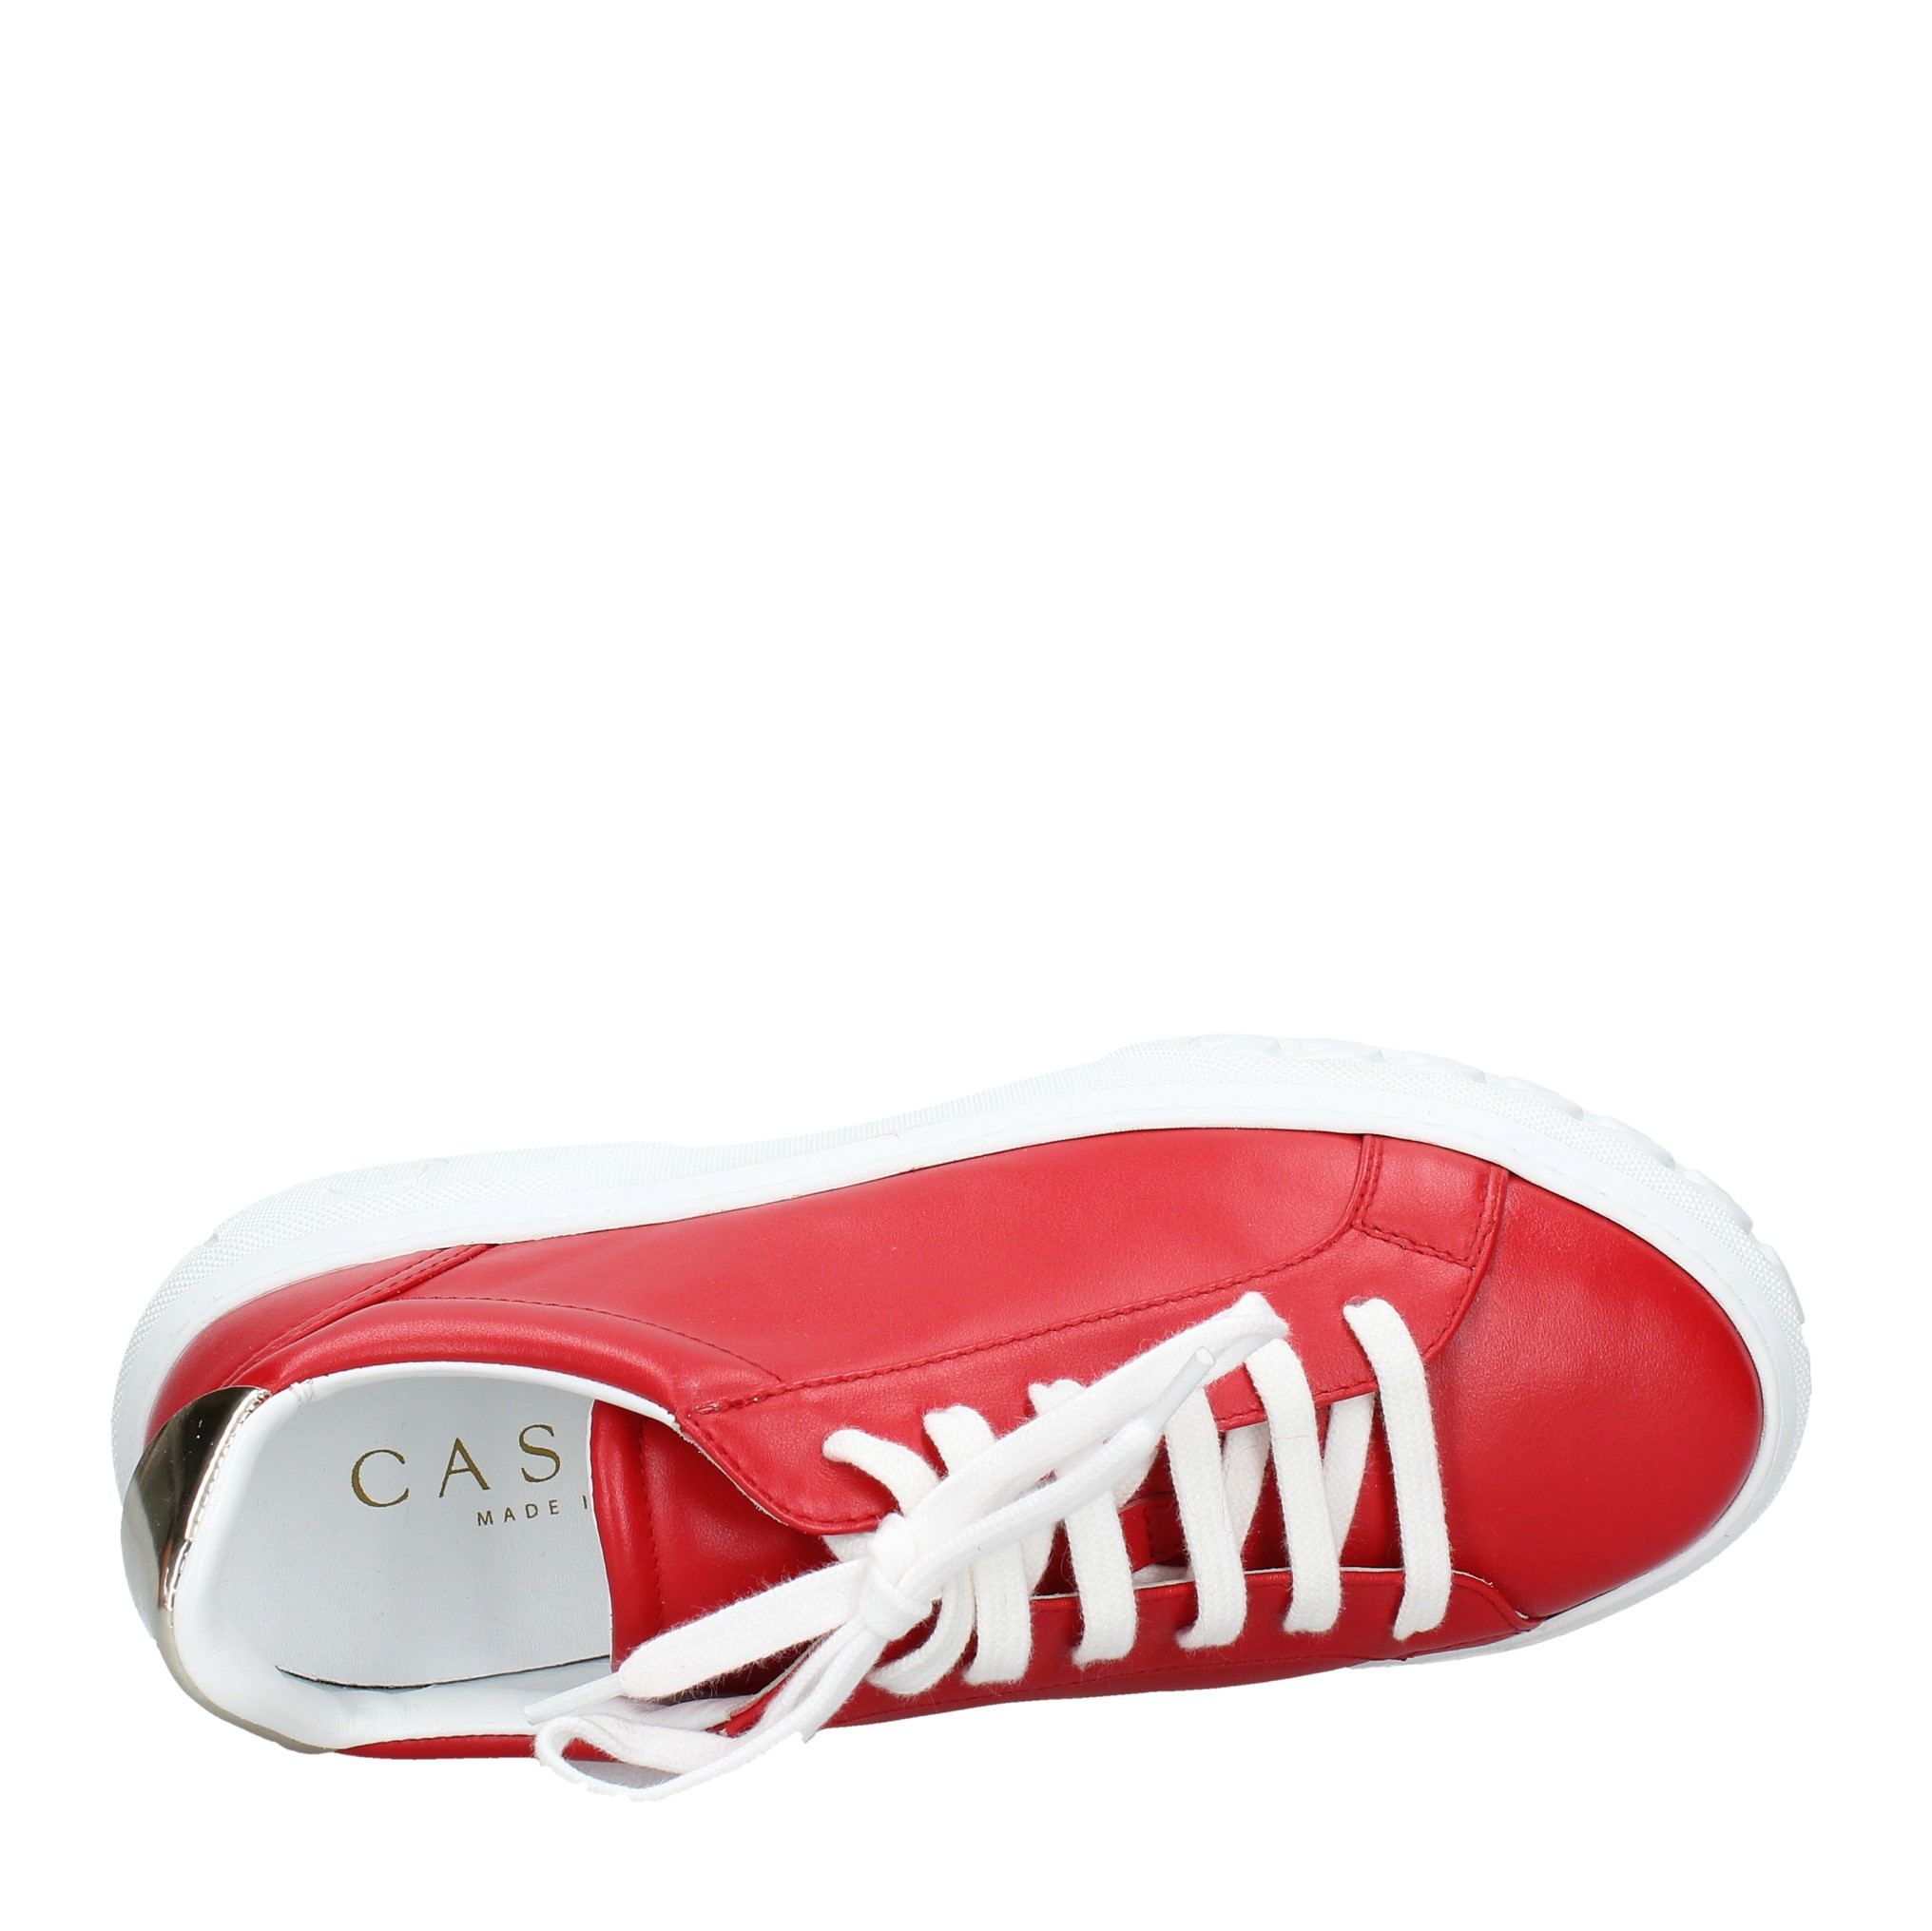 Leather sneakers - CASADEI - Ginevra calzature